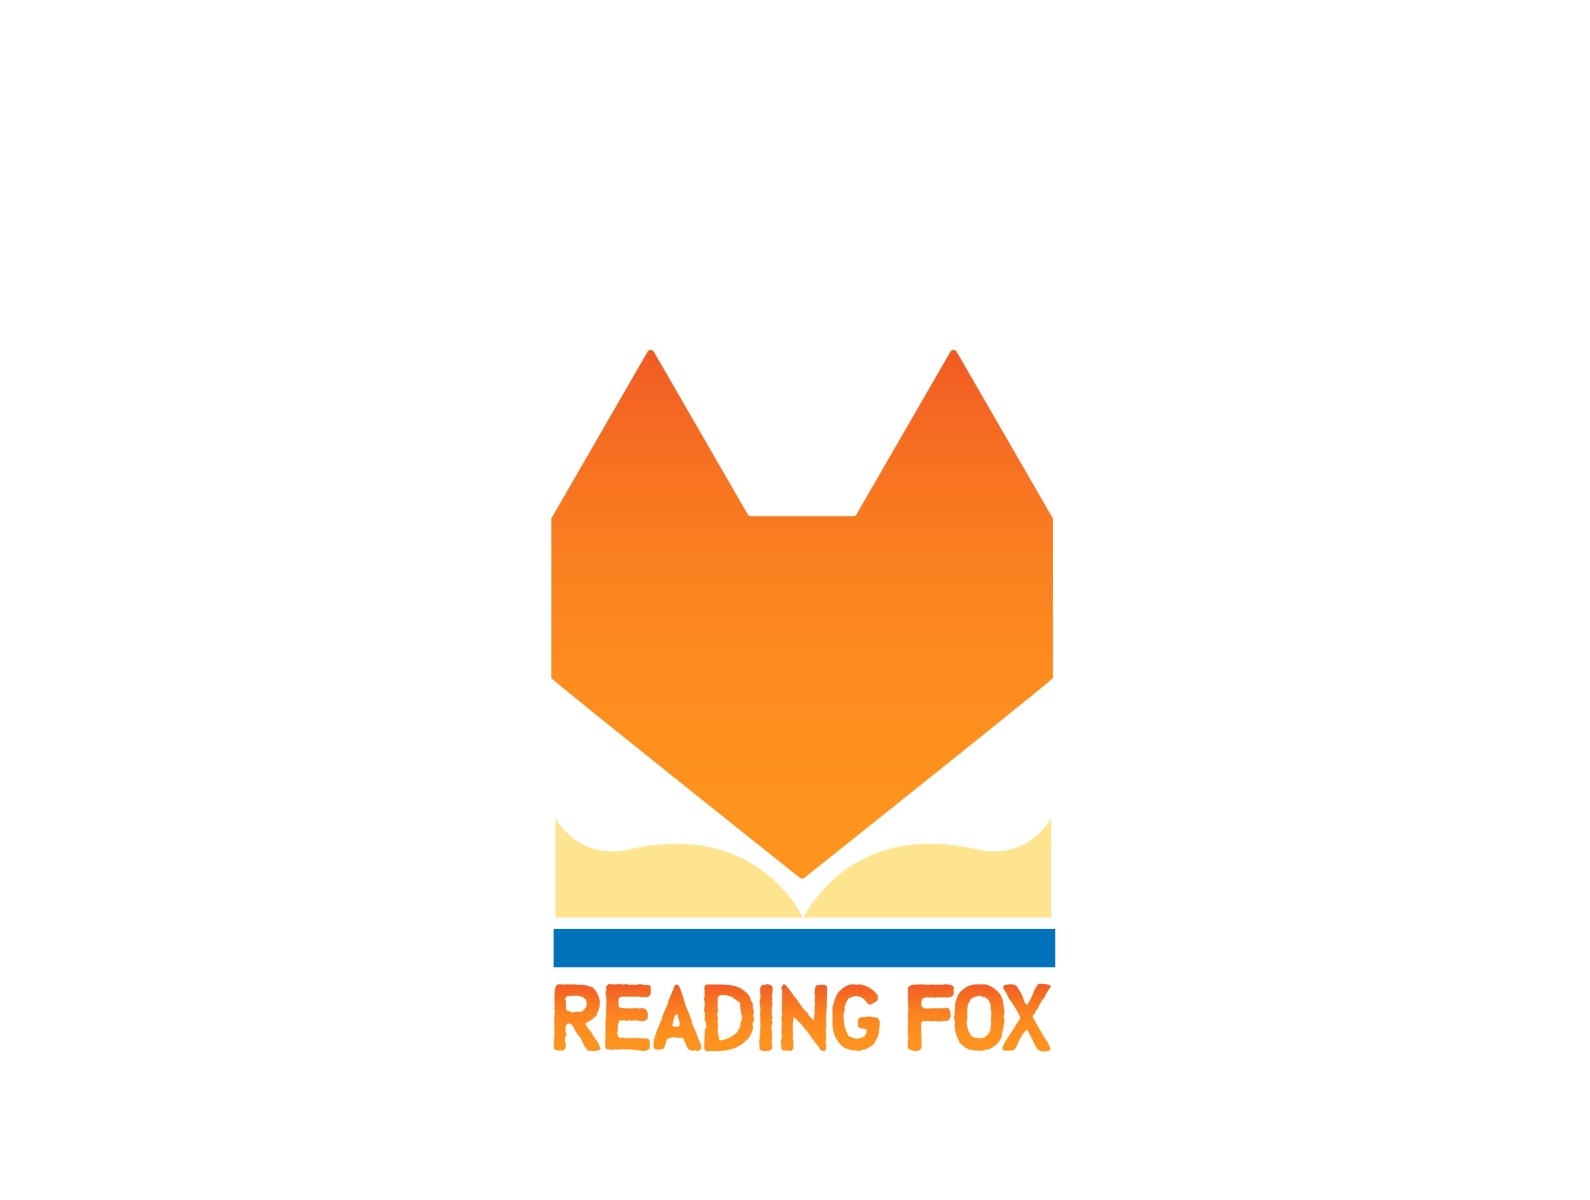 Логотип лисы. Логотип лиса книга. Логотип лиса с книжкой. Венчур Фокс логотип. Reading fox